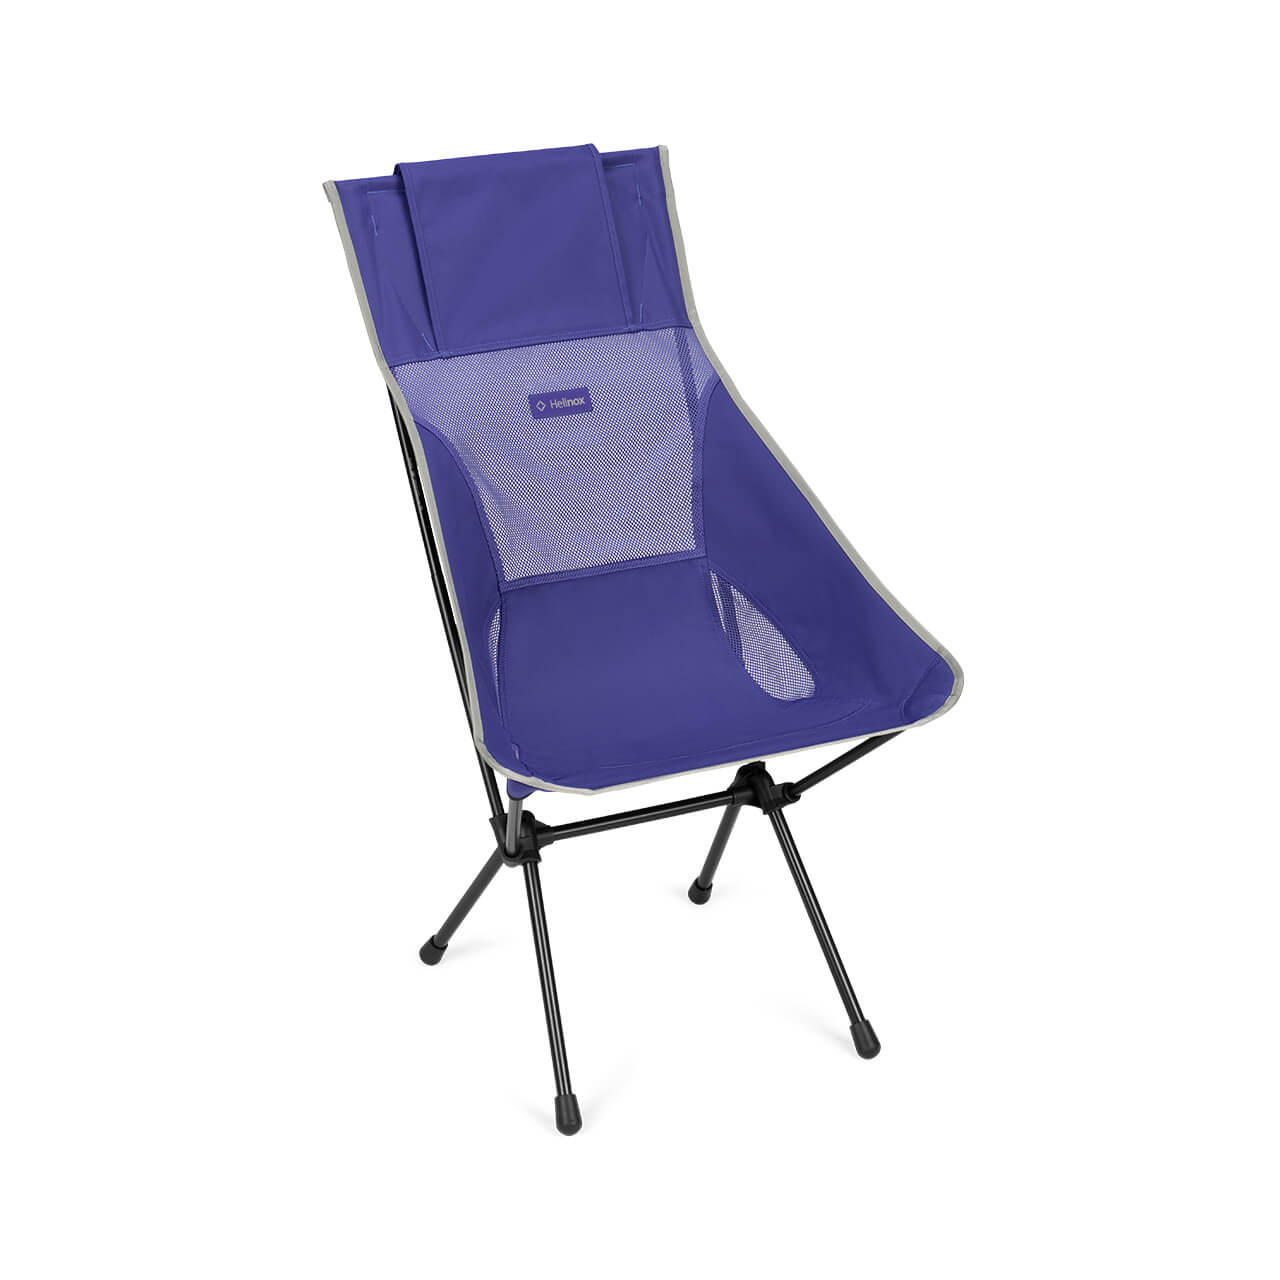 Helinox Sunset Lightweight Packable Camping Chair